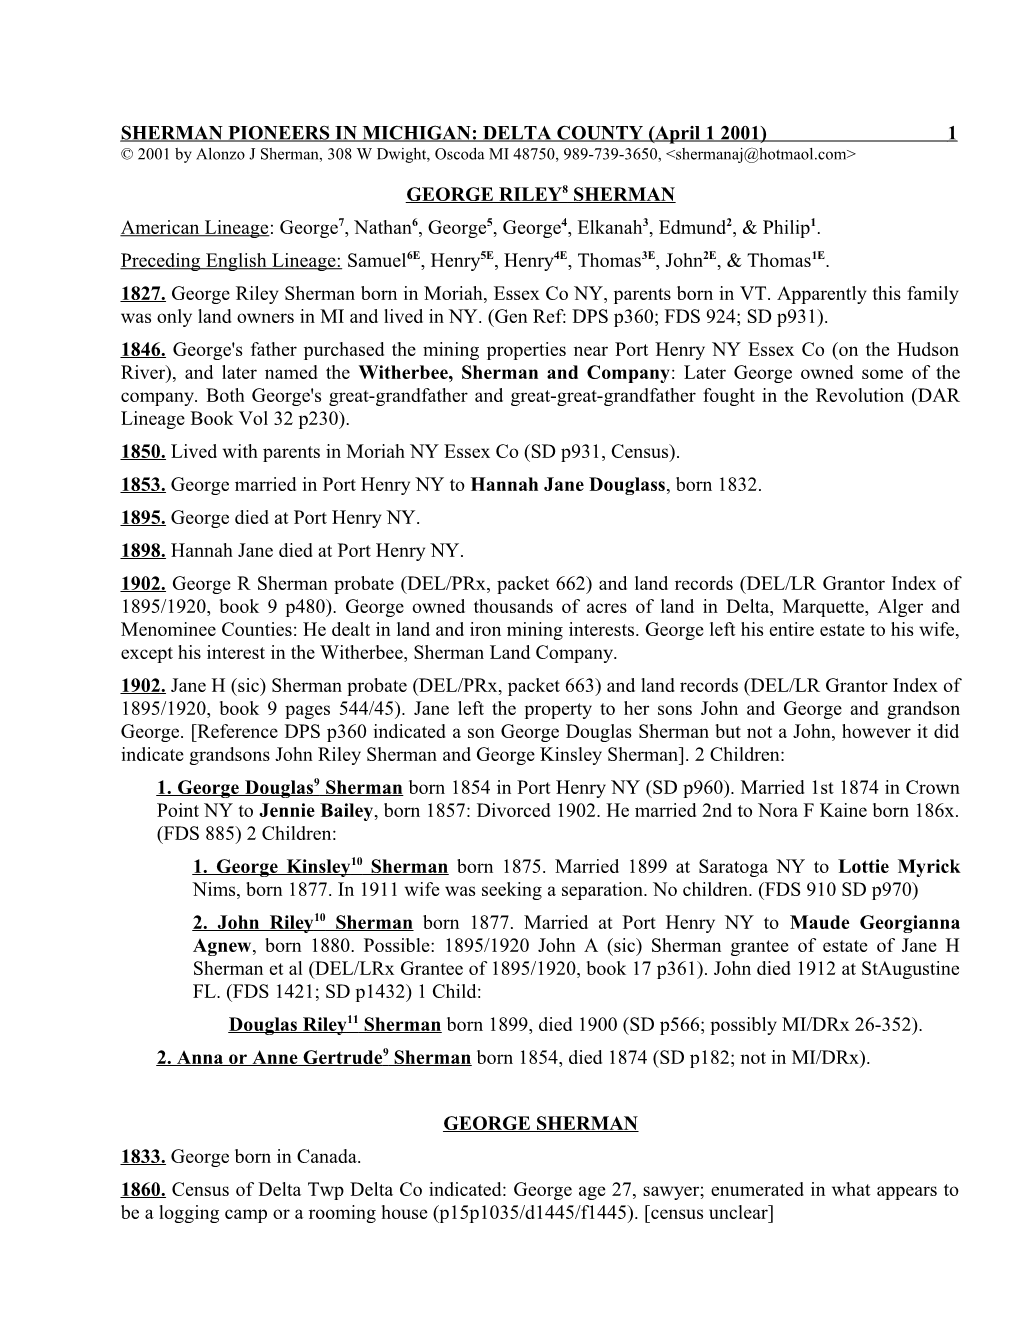 SHERMAN PIONEERS in MICHIGAN: DELTA COUNTY (April 1 2001) 3